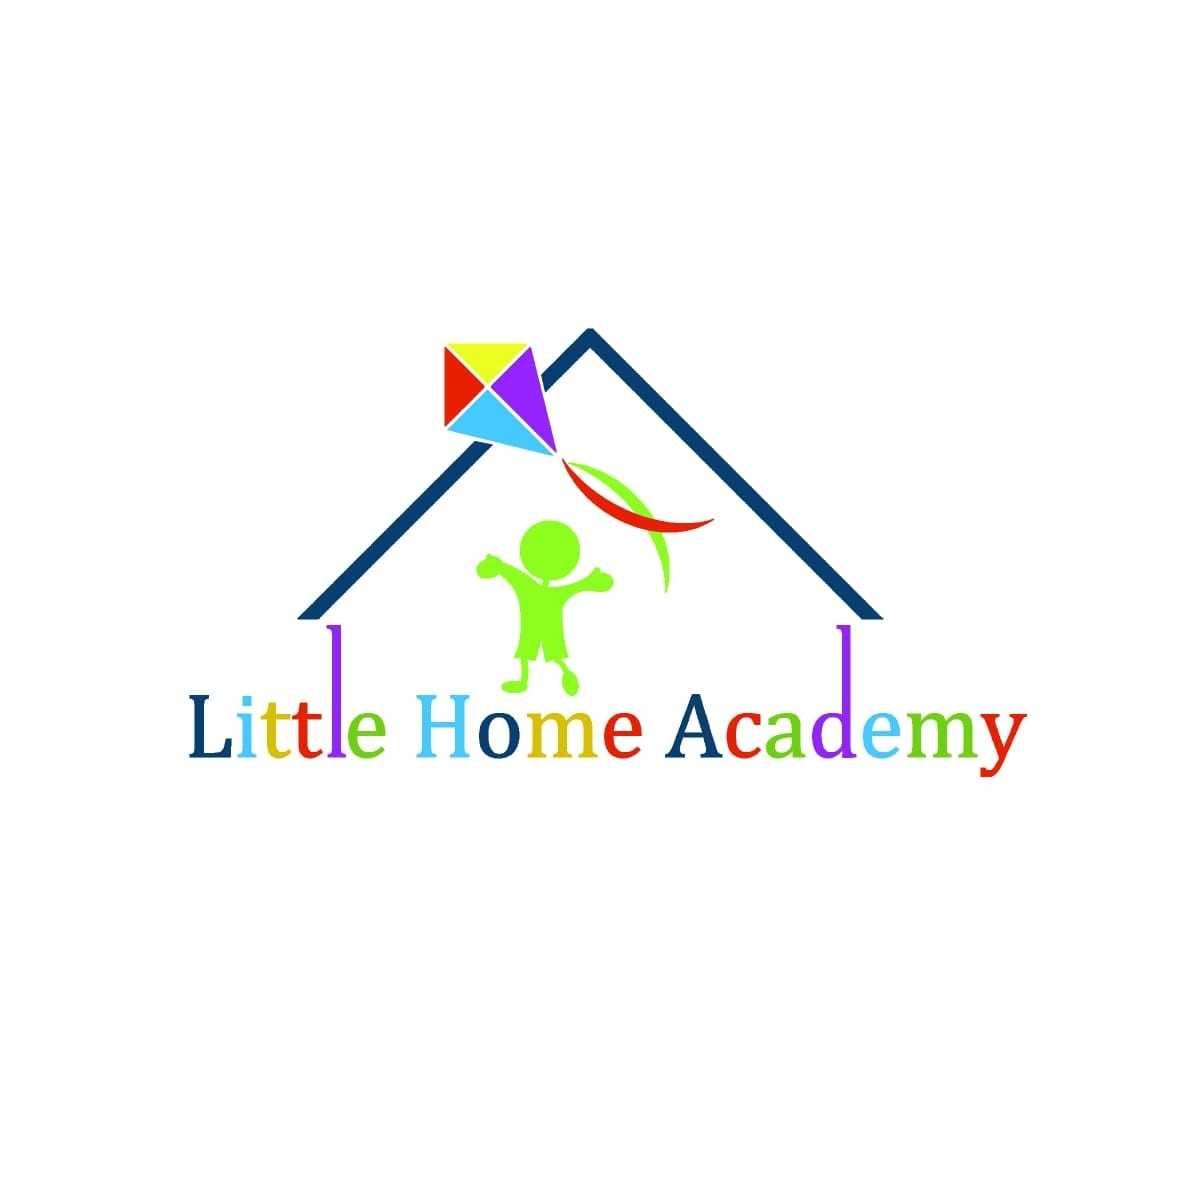 Little Home Academy